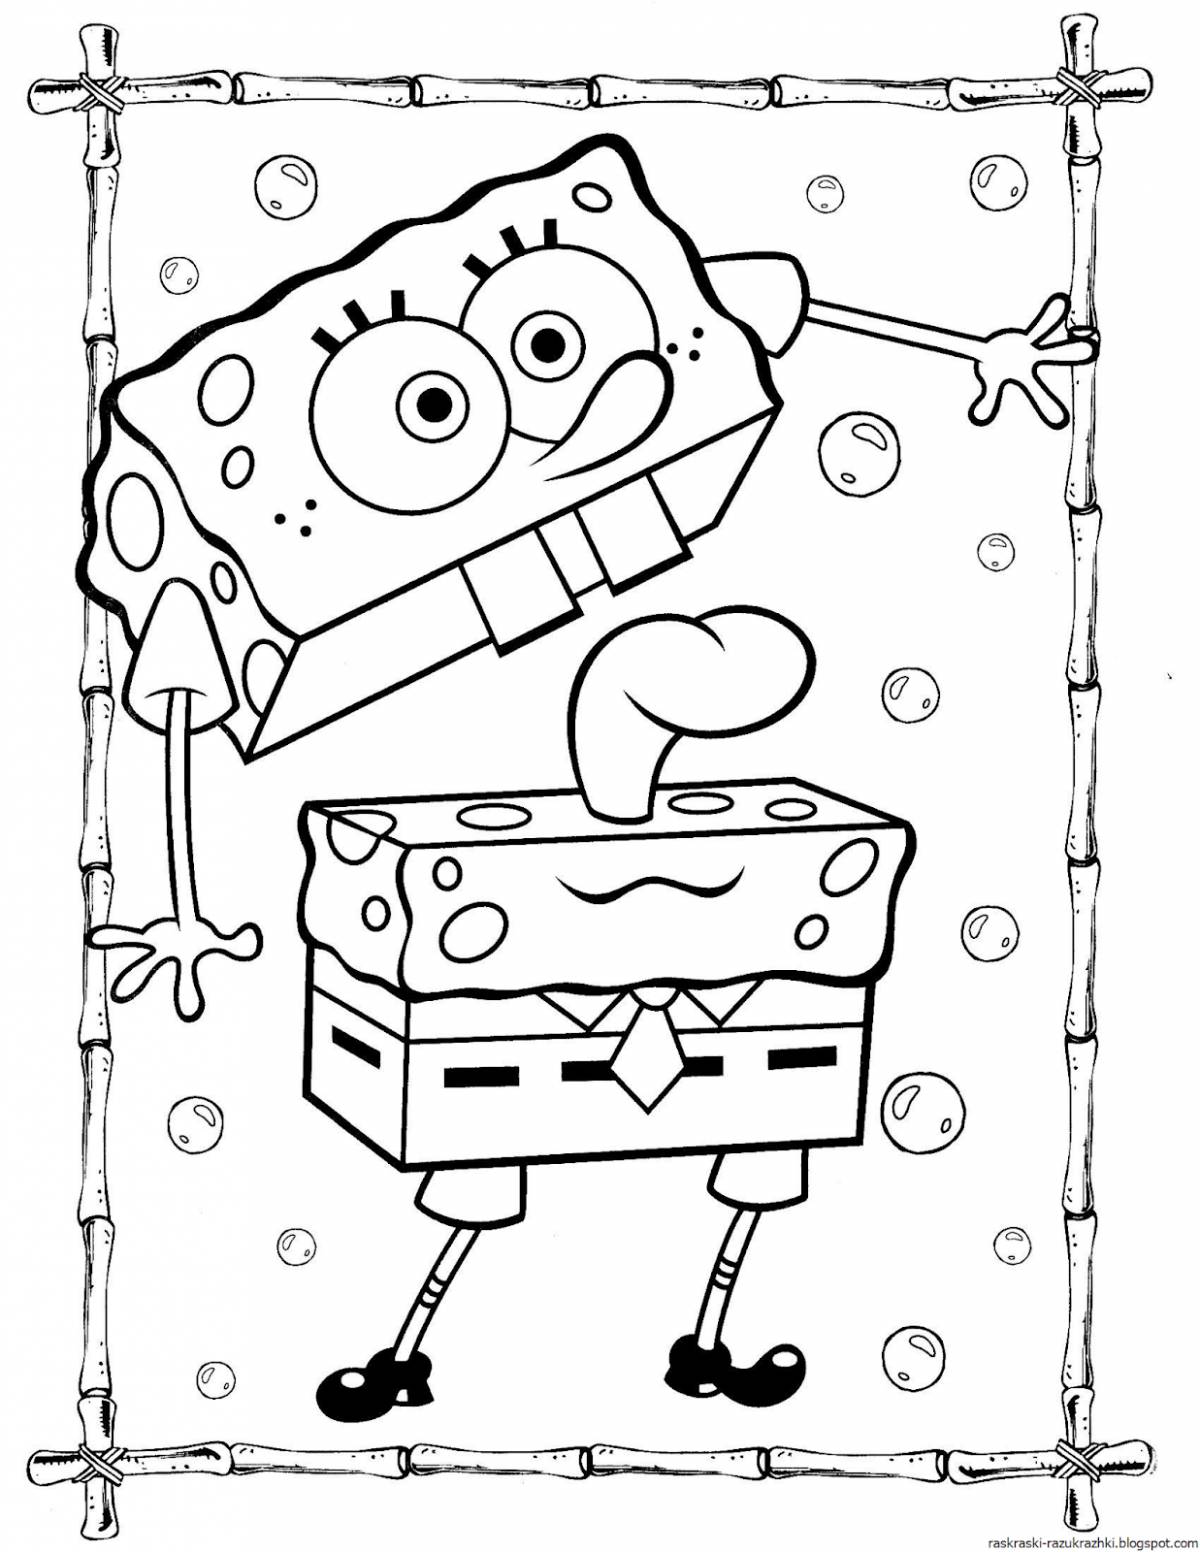 Coloring funny spongebob squarepants